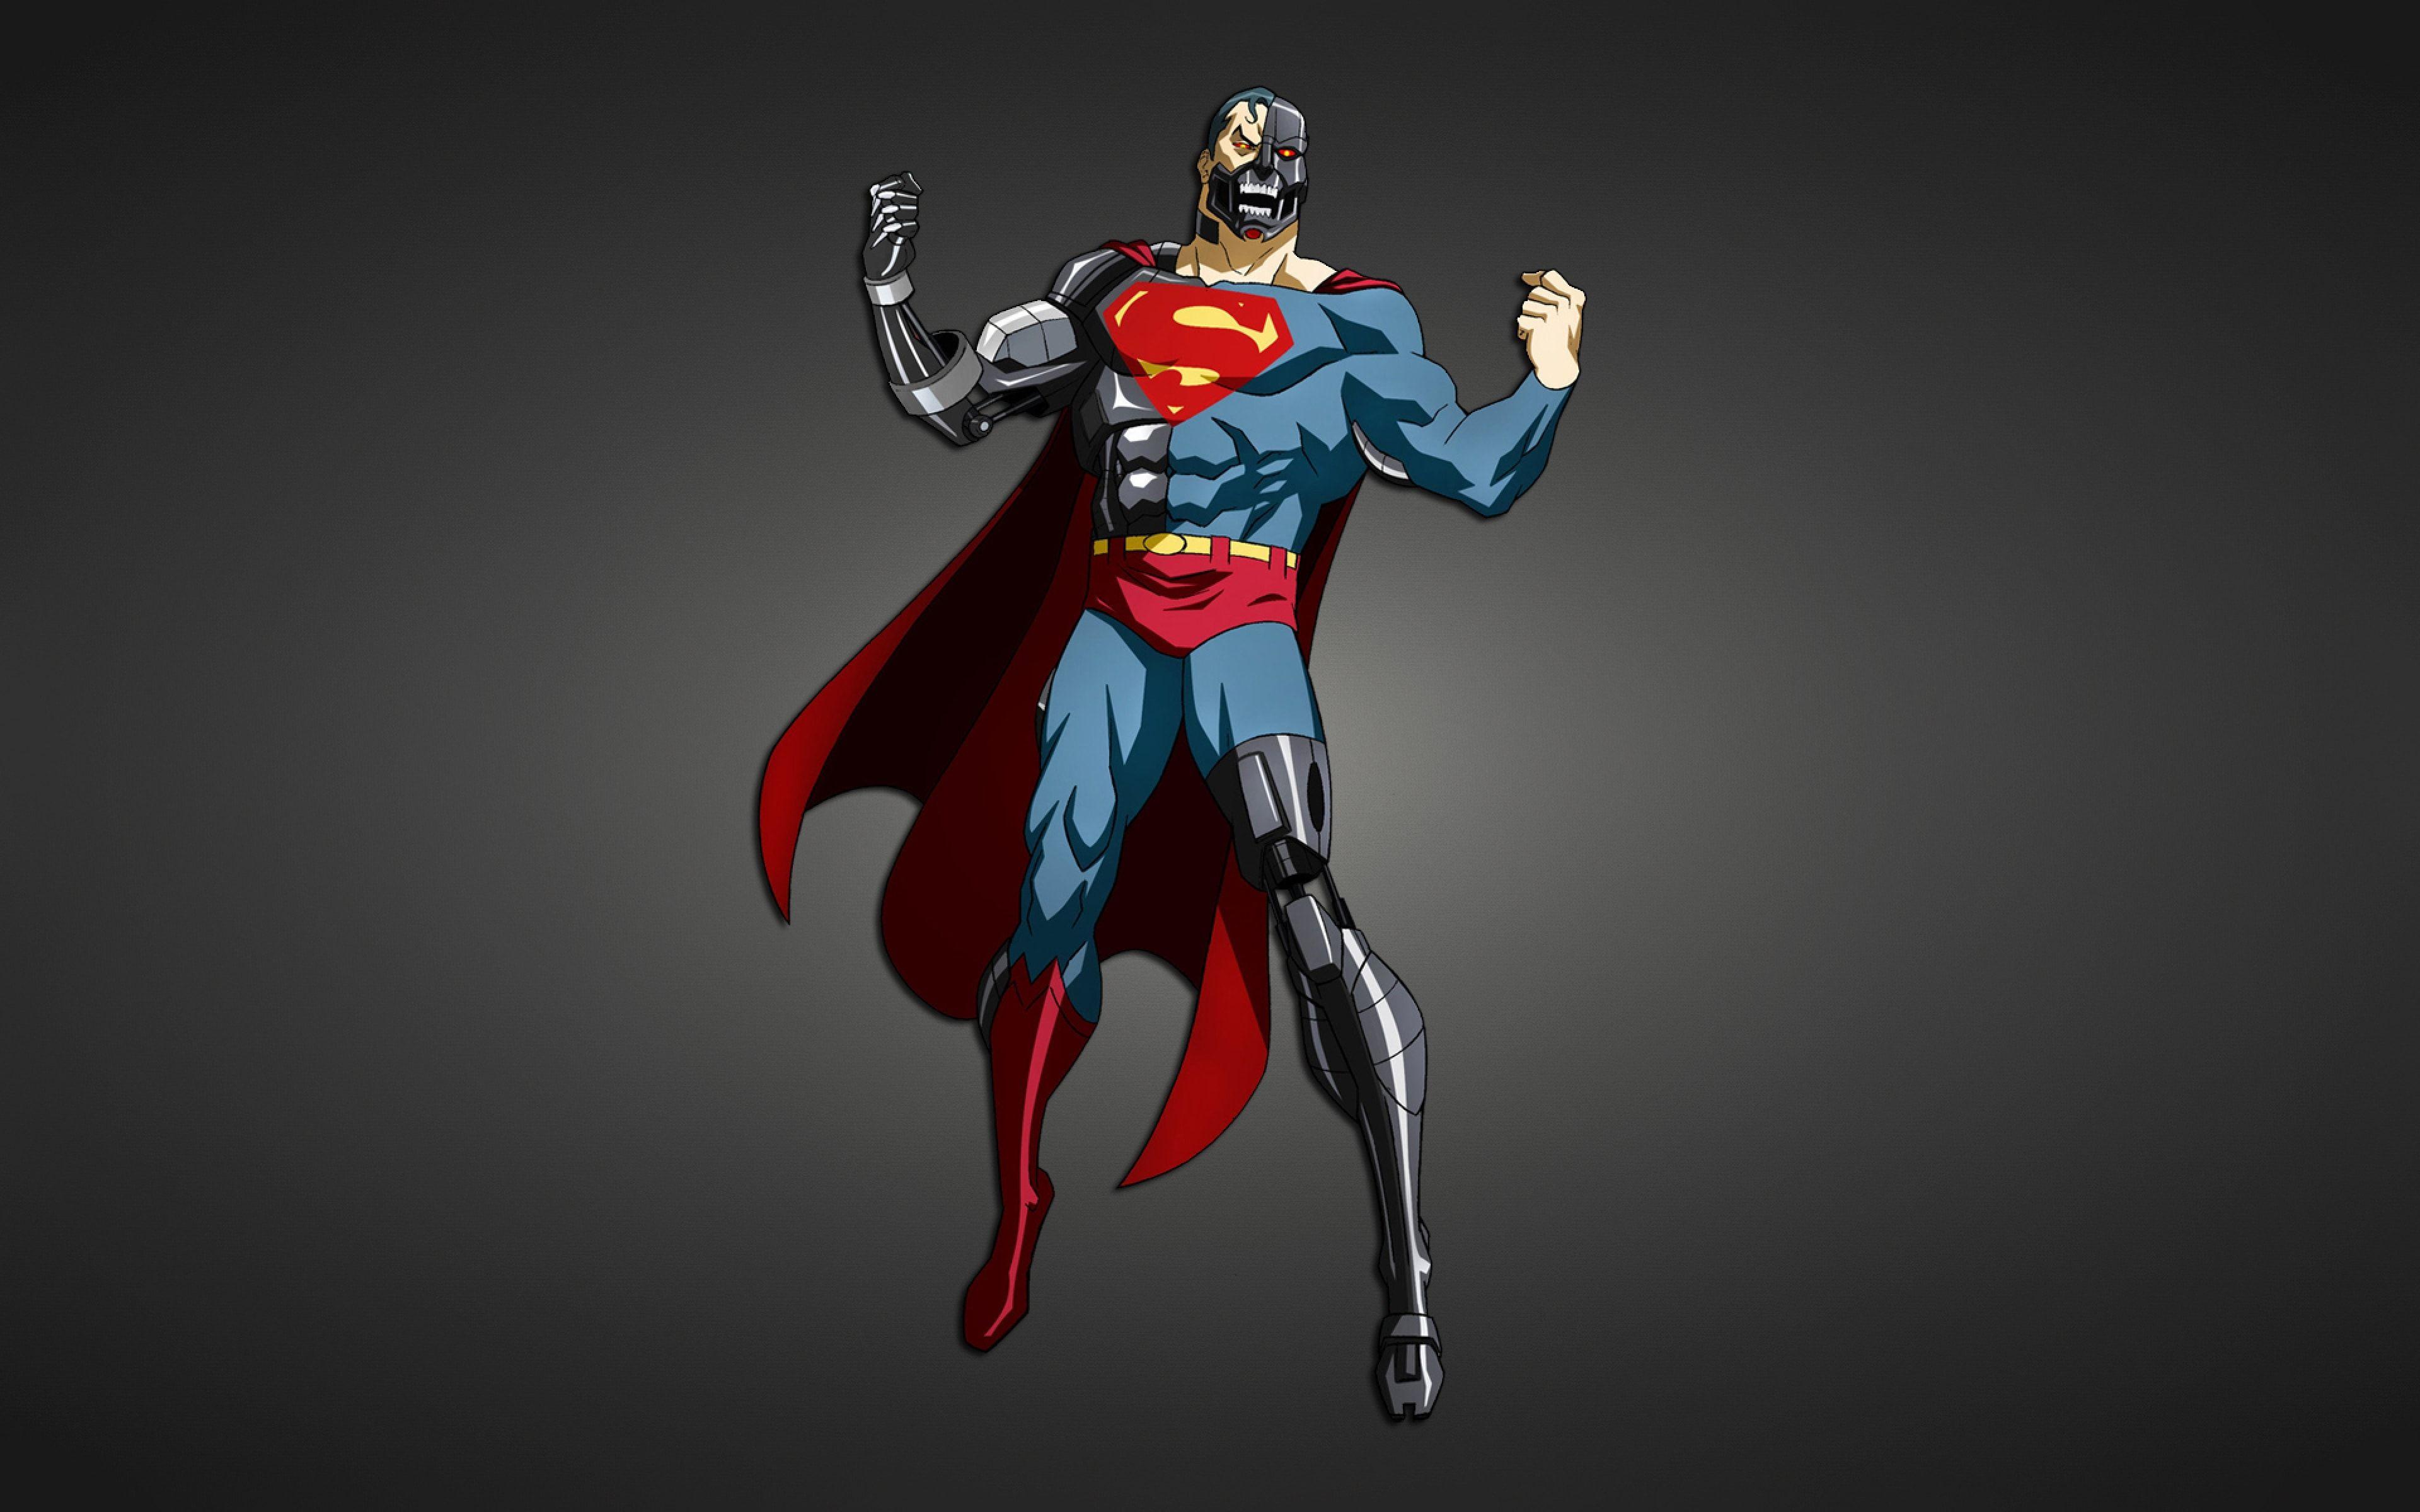 Superman Superhero Cyborg. The best wallpaper background